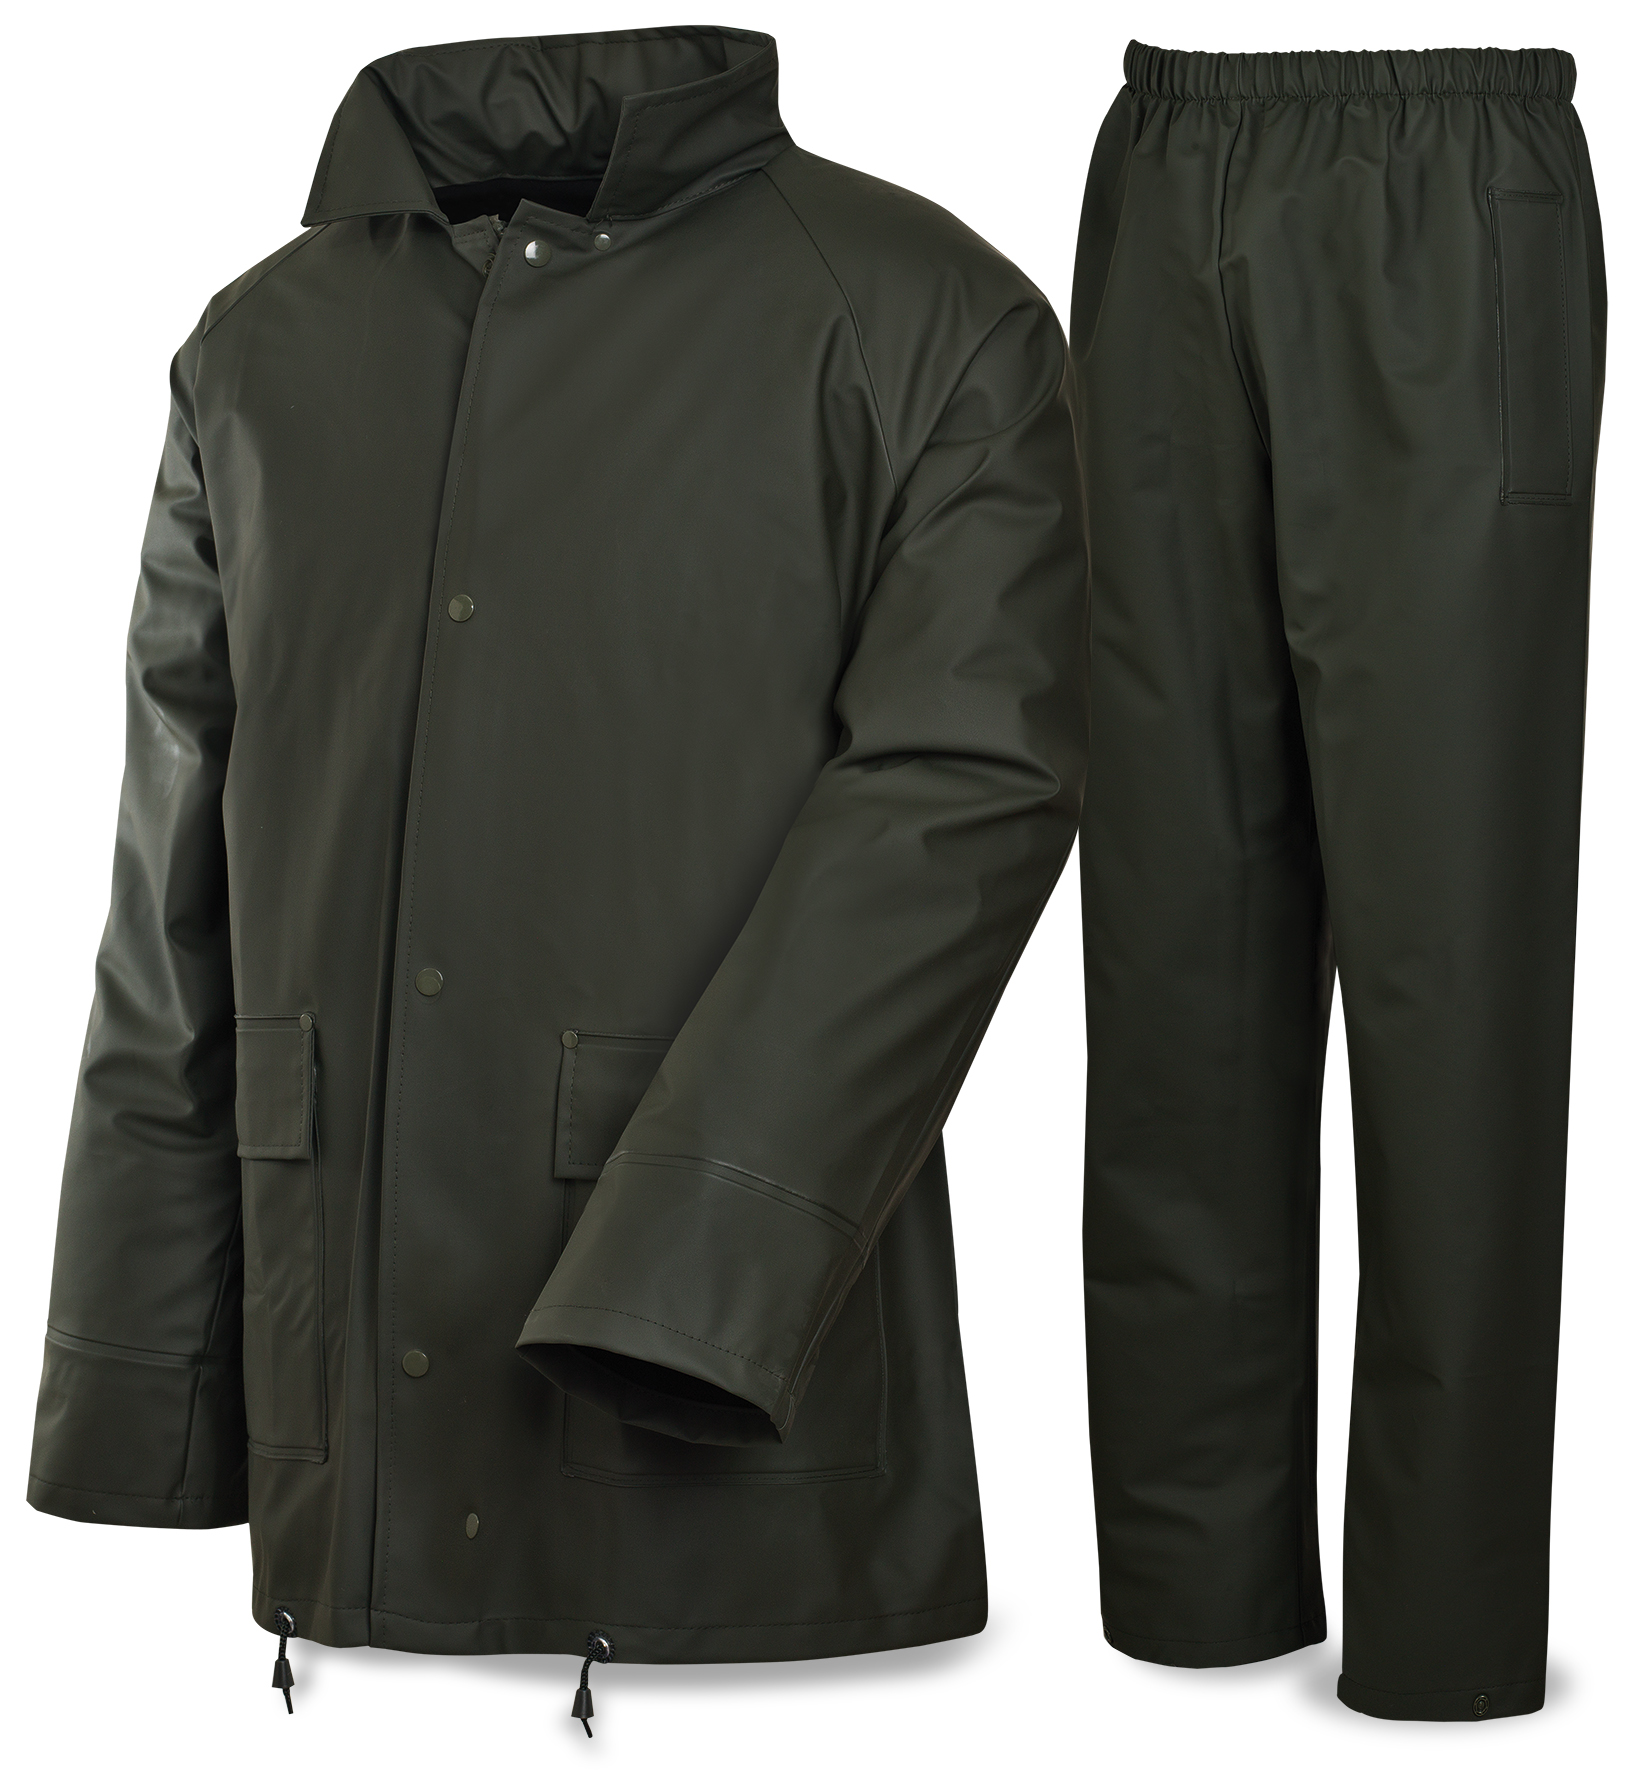 188TAPPV Coats and Rain Gear Rain Gear Green PU/PVC/PES neoprene suit 300 g.